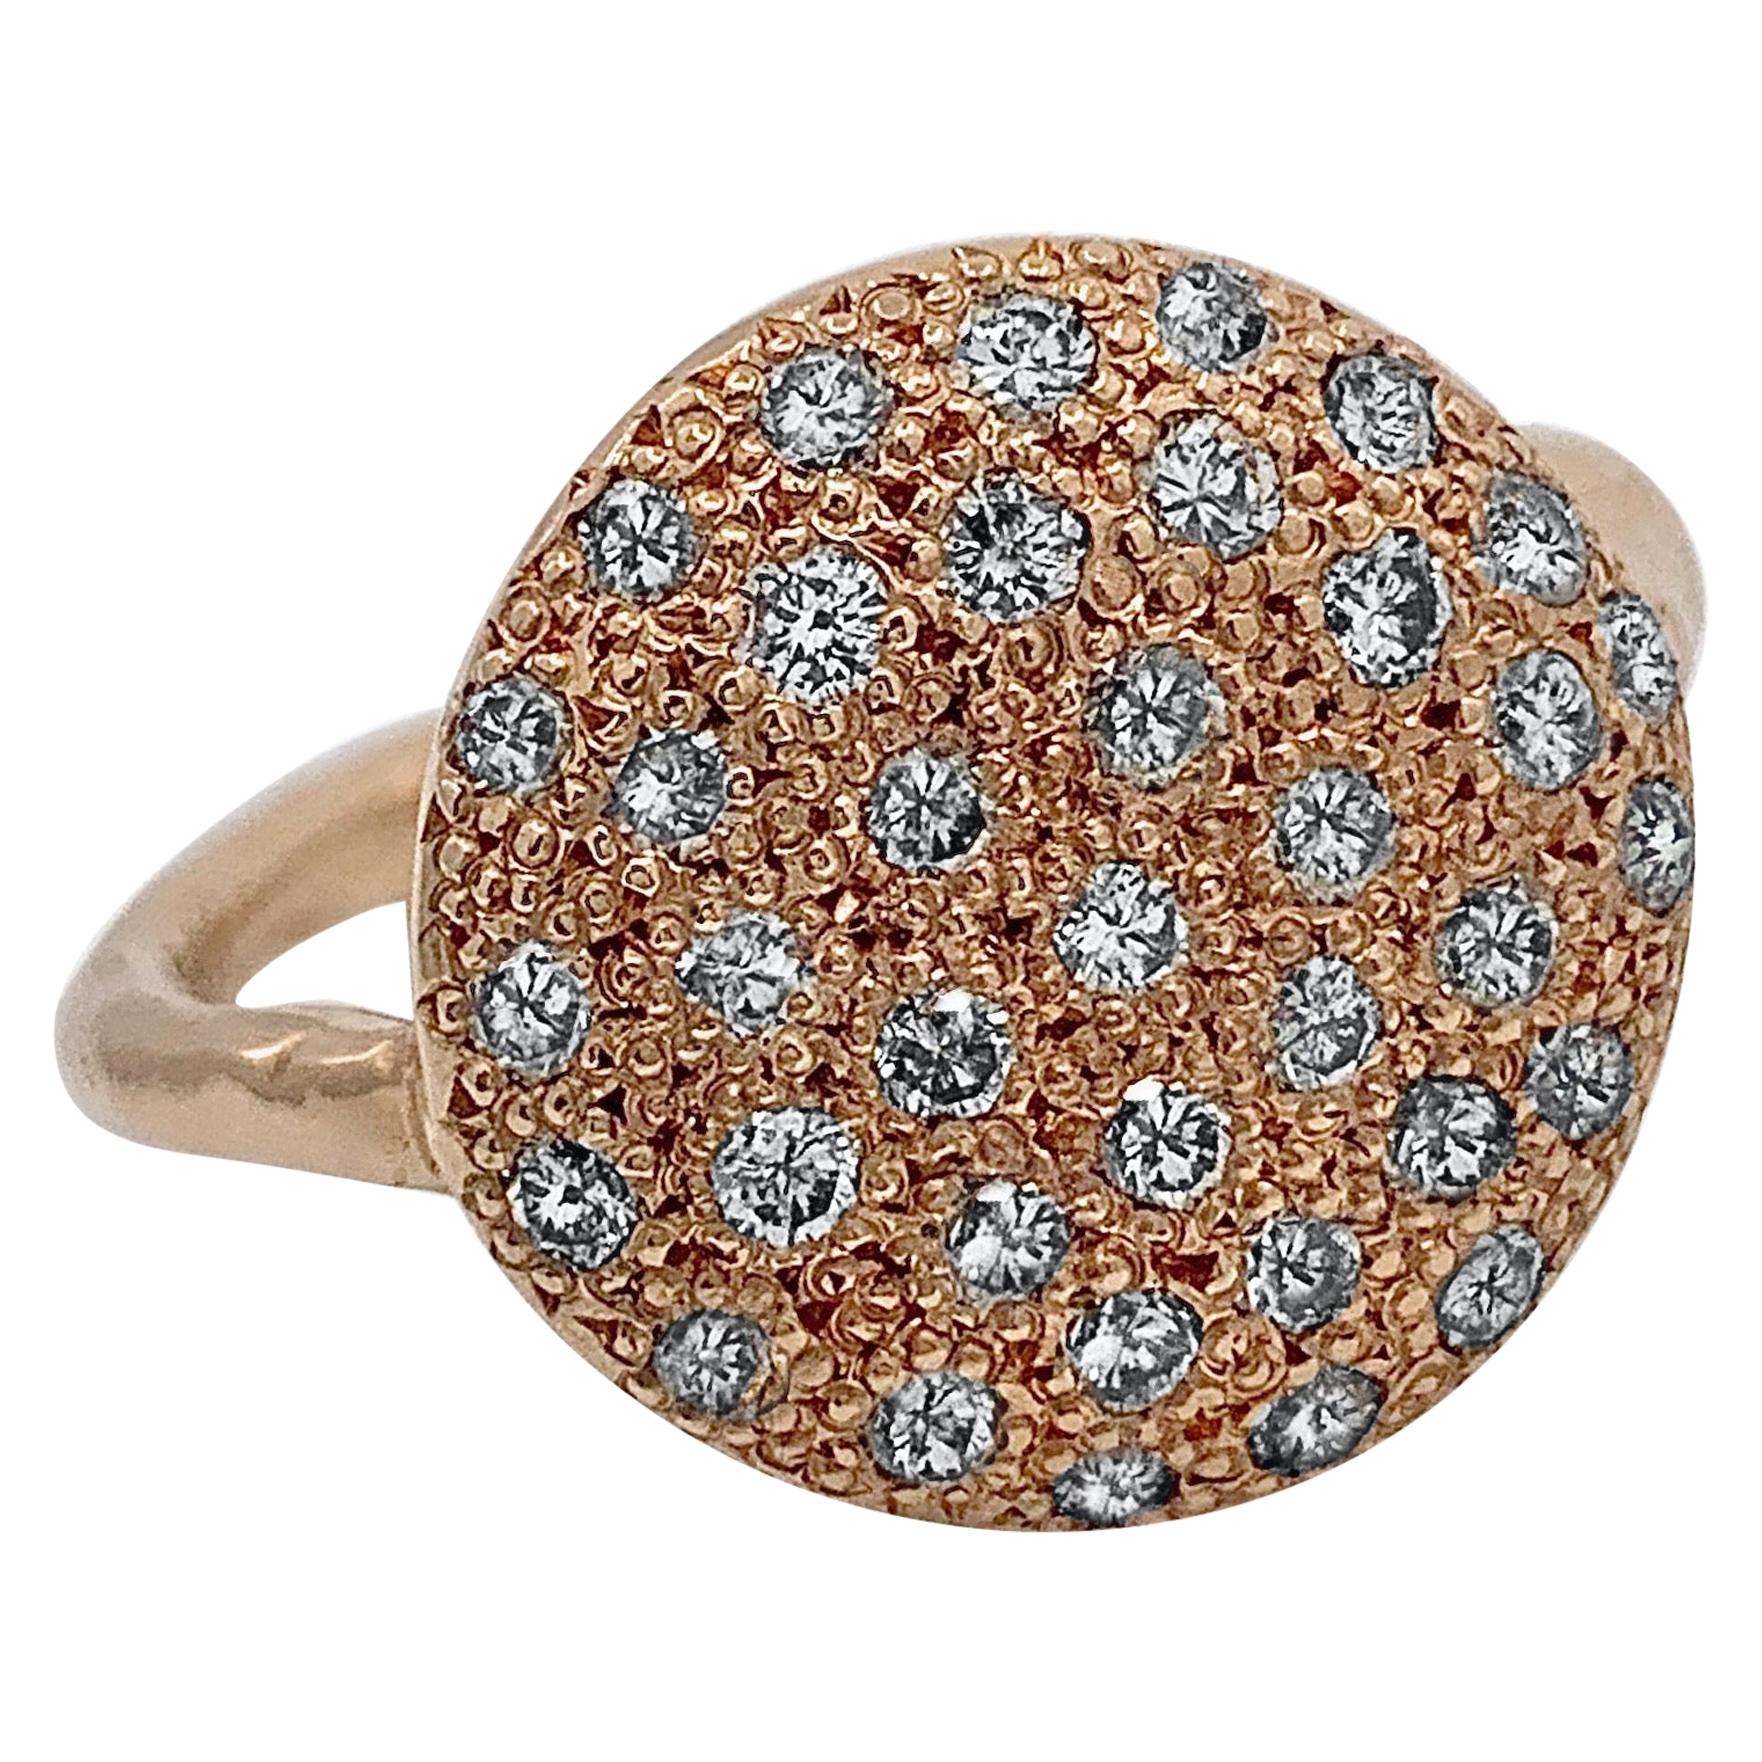 "Big Cookie" 0.36 Carat Pavé Diamond Slab Ring in Textured Rose Gold